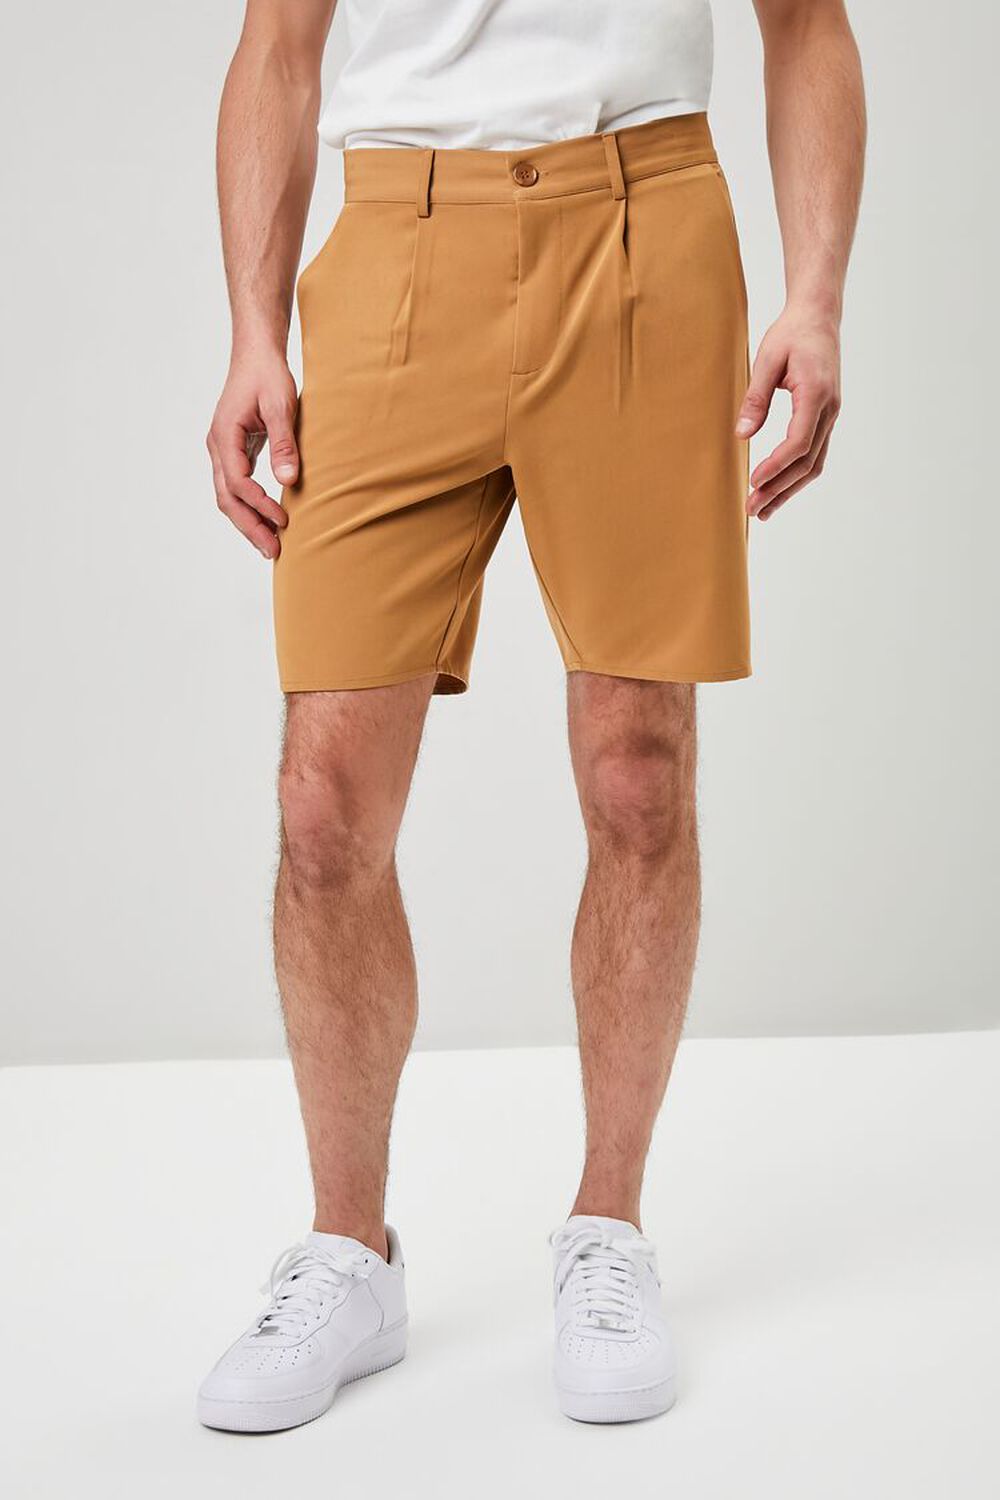 Pocket Zip-Fly Shorts, image 2